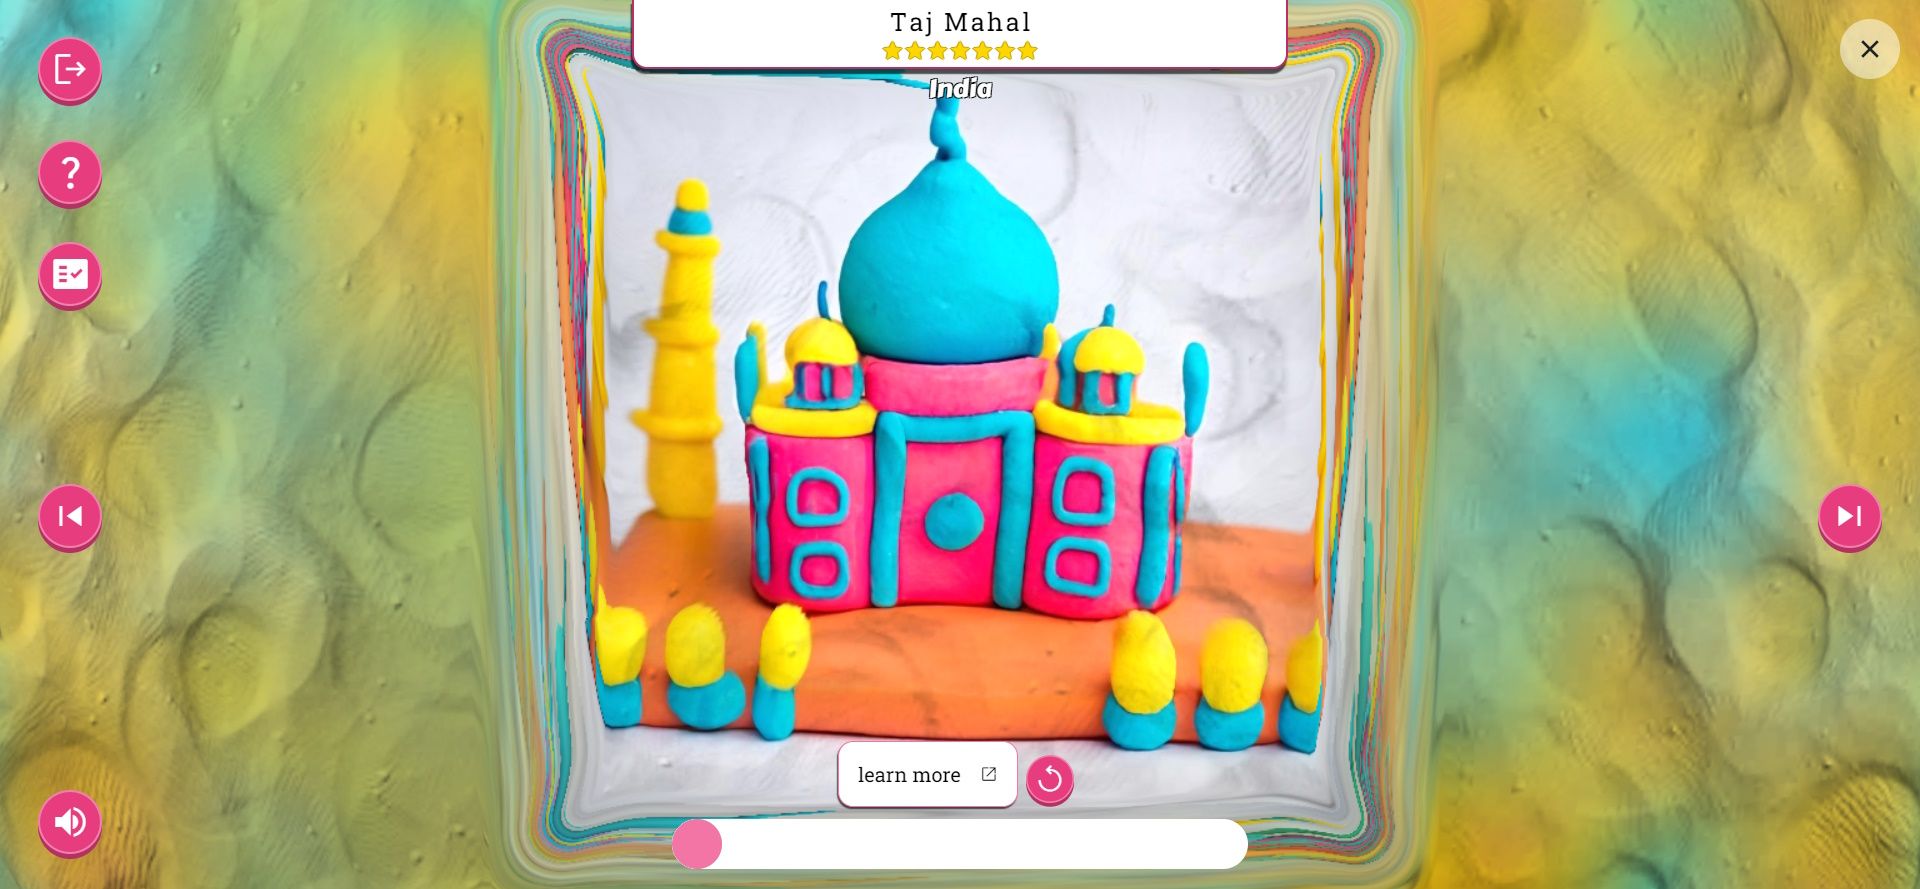 a complete dough version of the Taj Mahal from the Google AI game Un Dough